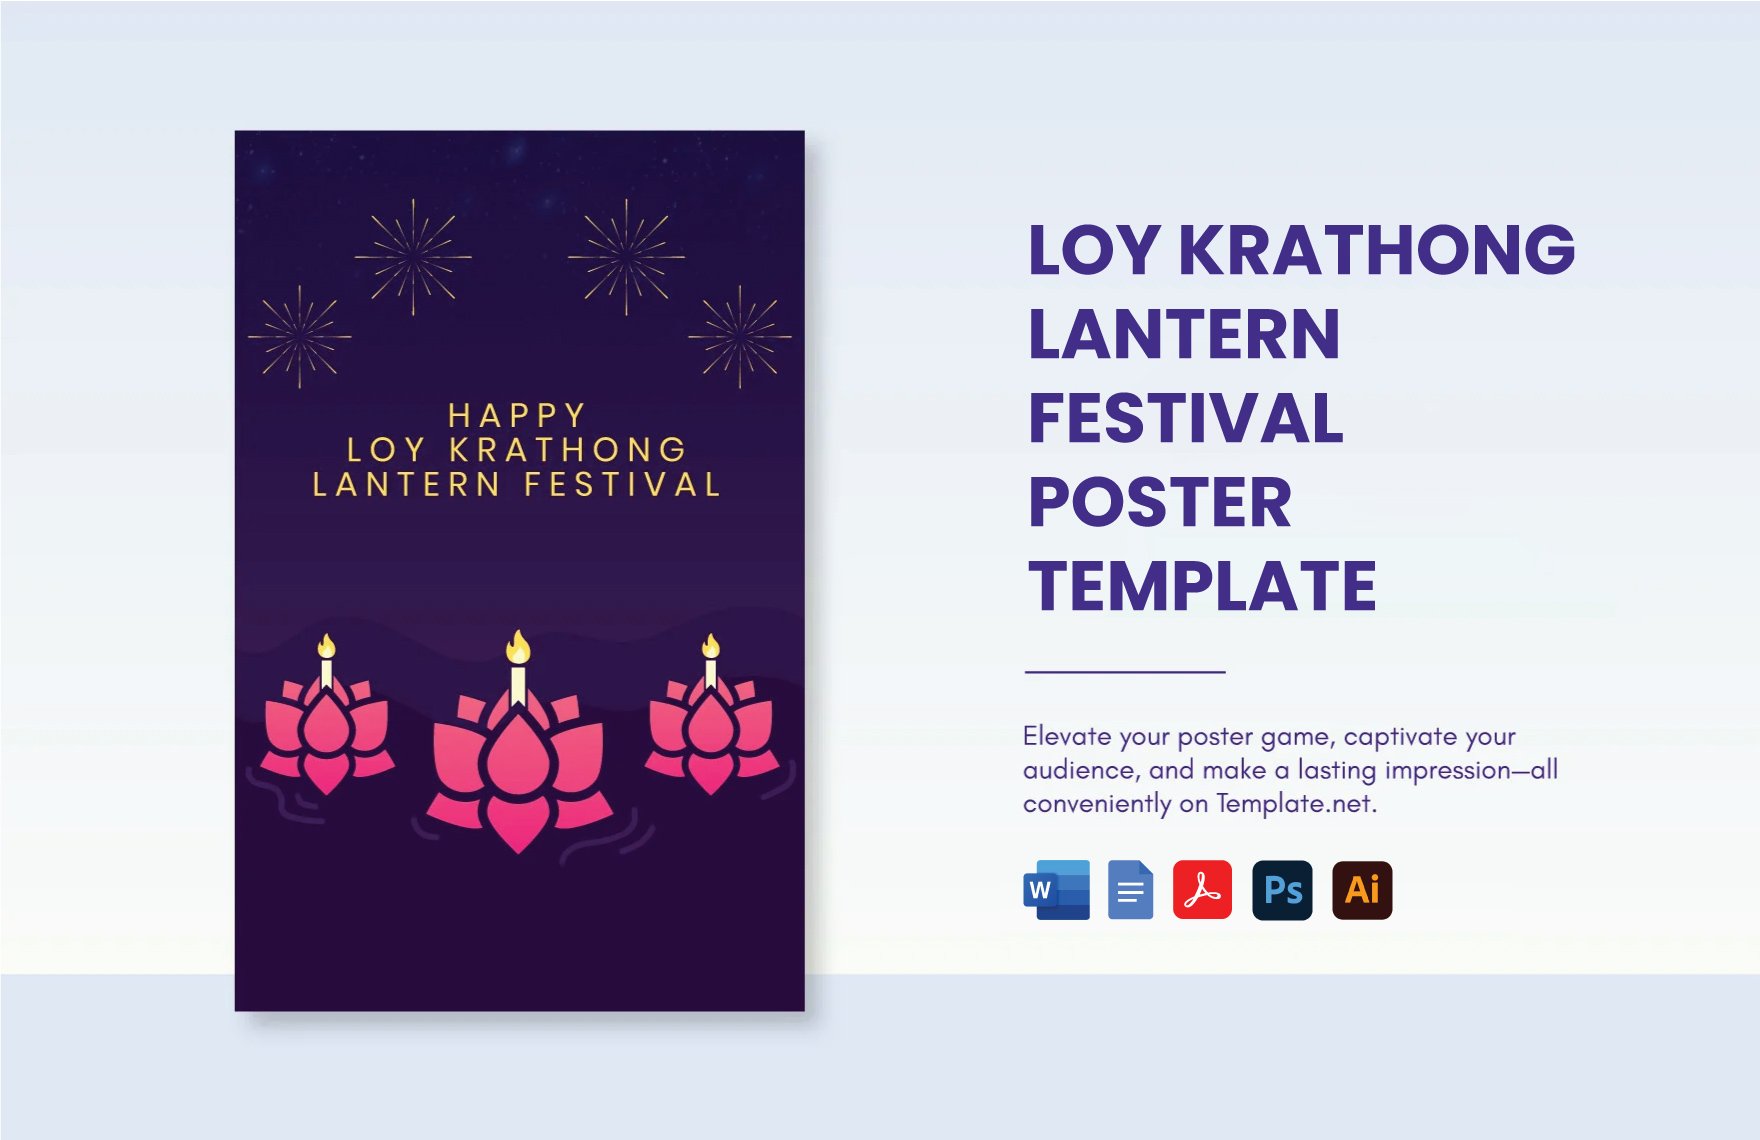 Loy Krathong Lantern Festival Poster Template